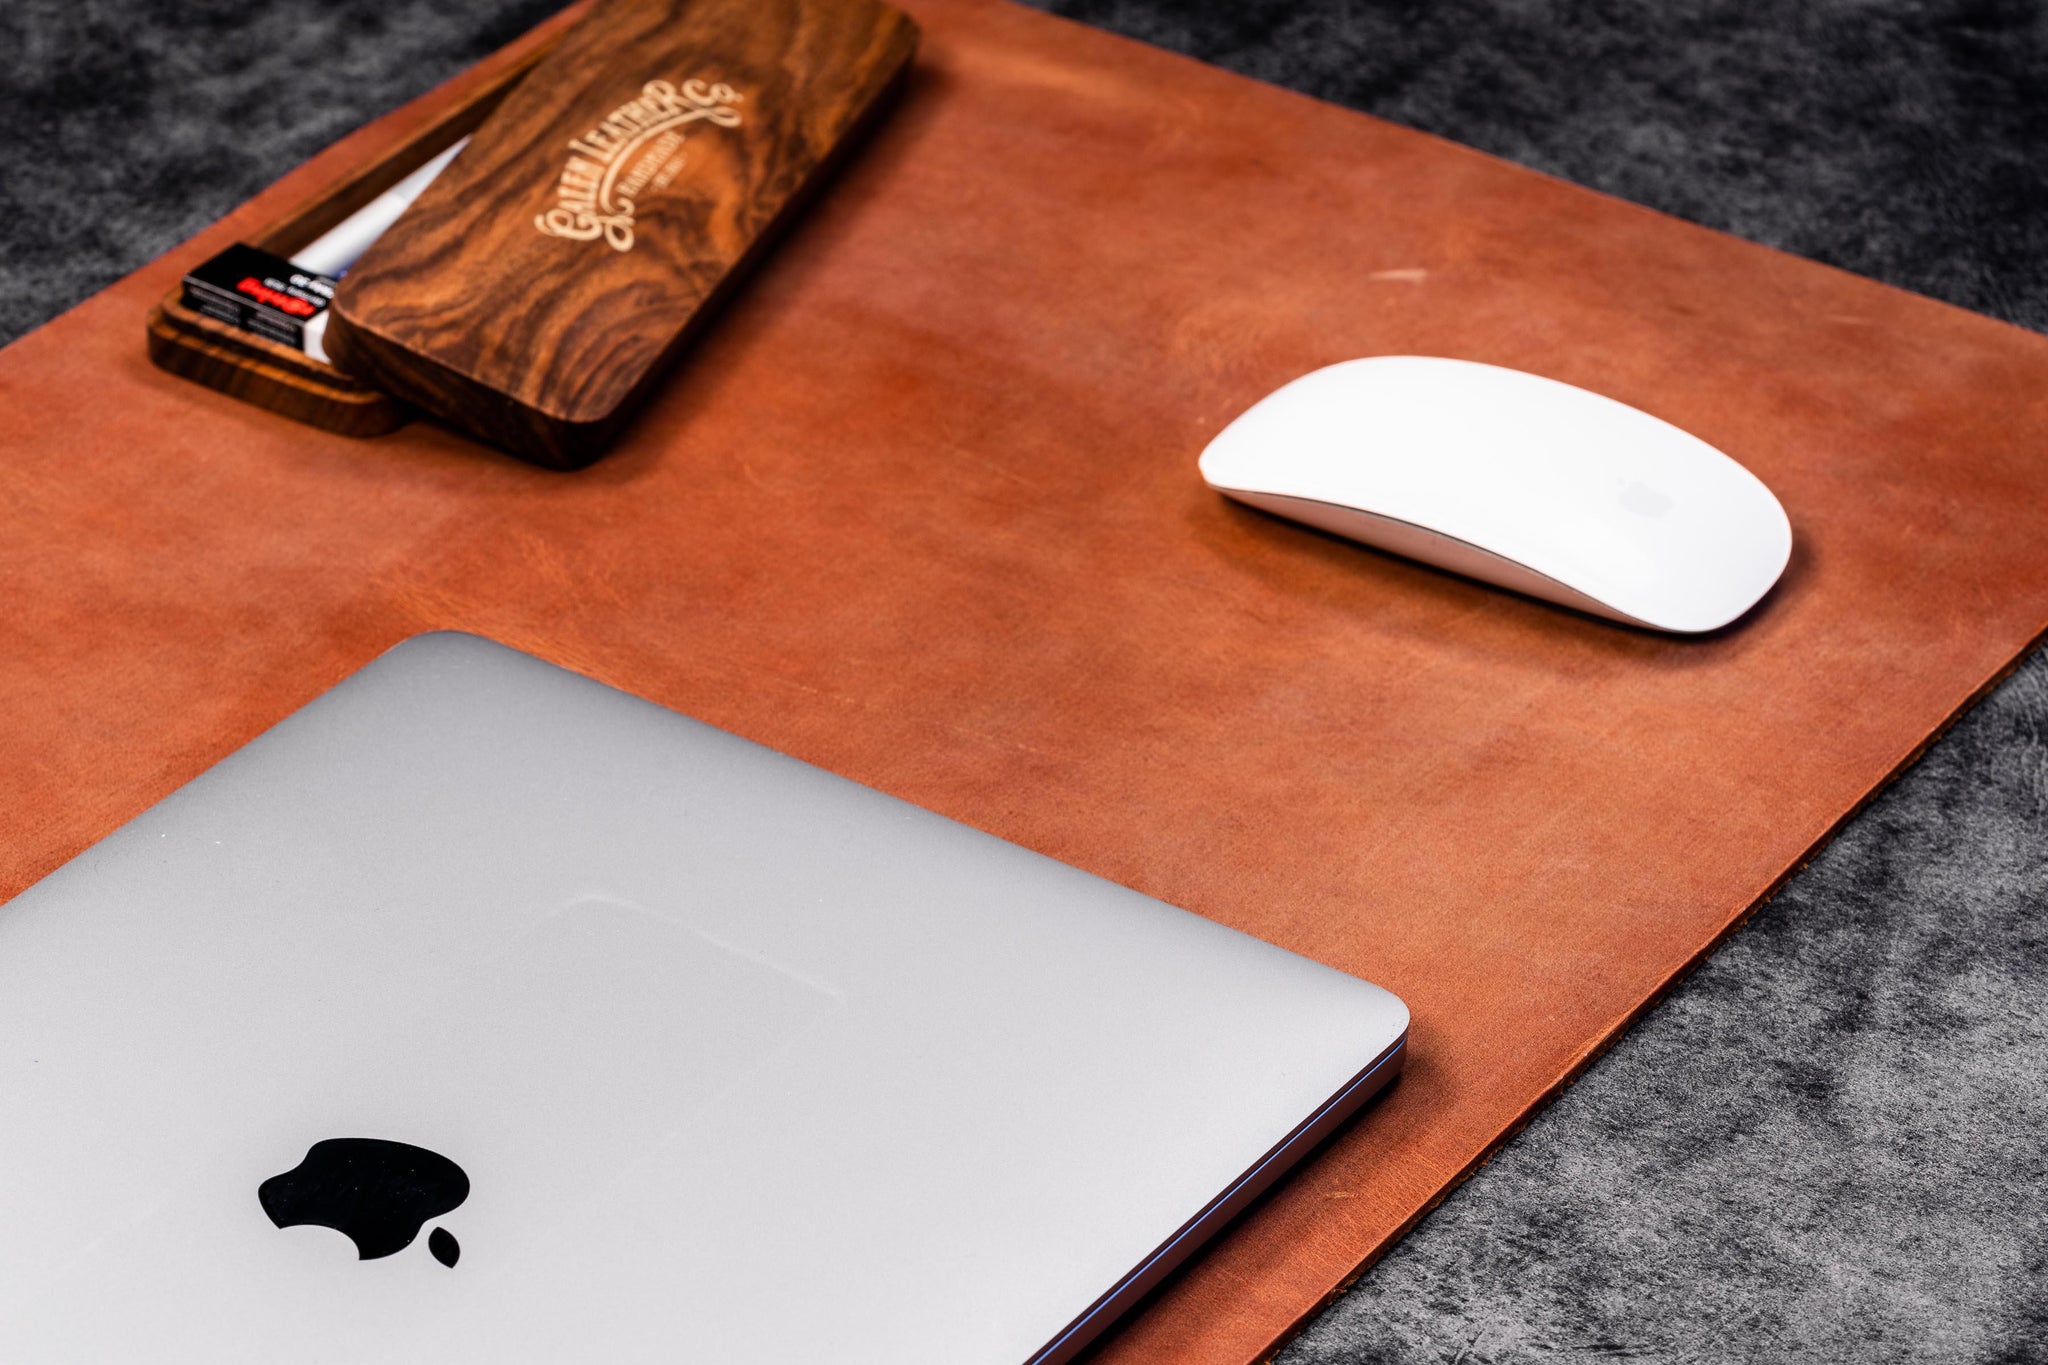 Leather Desk Mat – 100percent